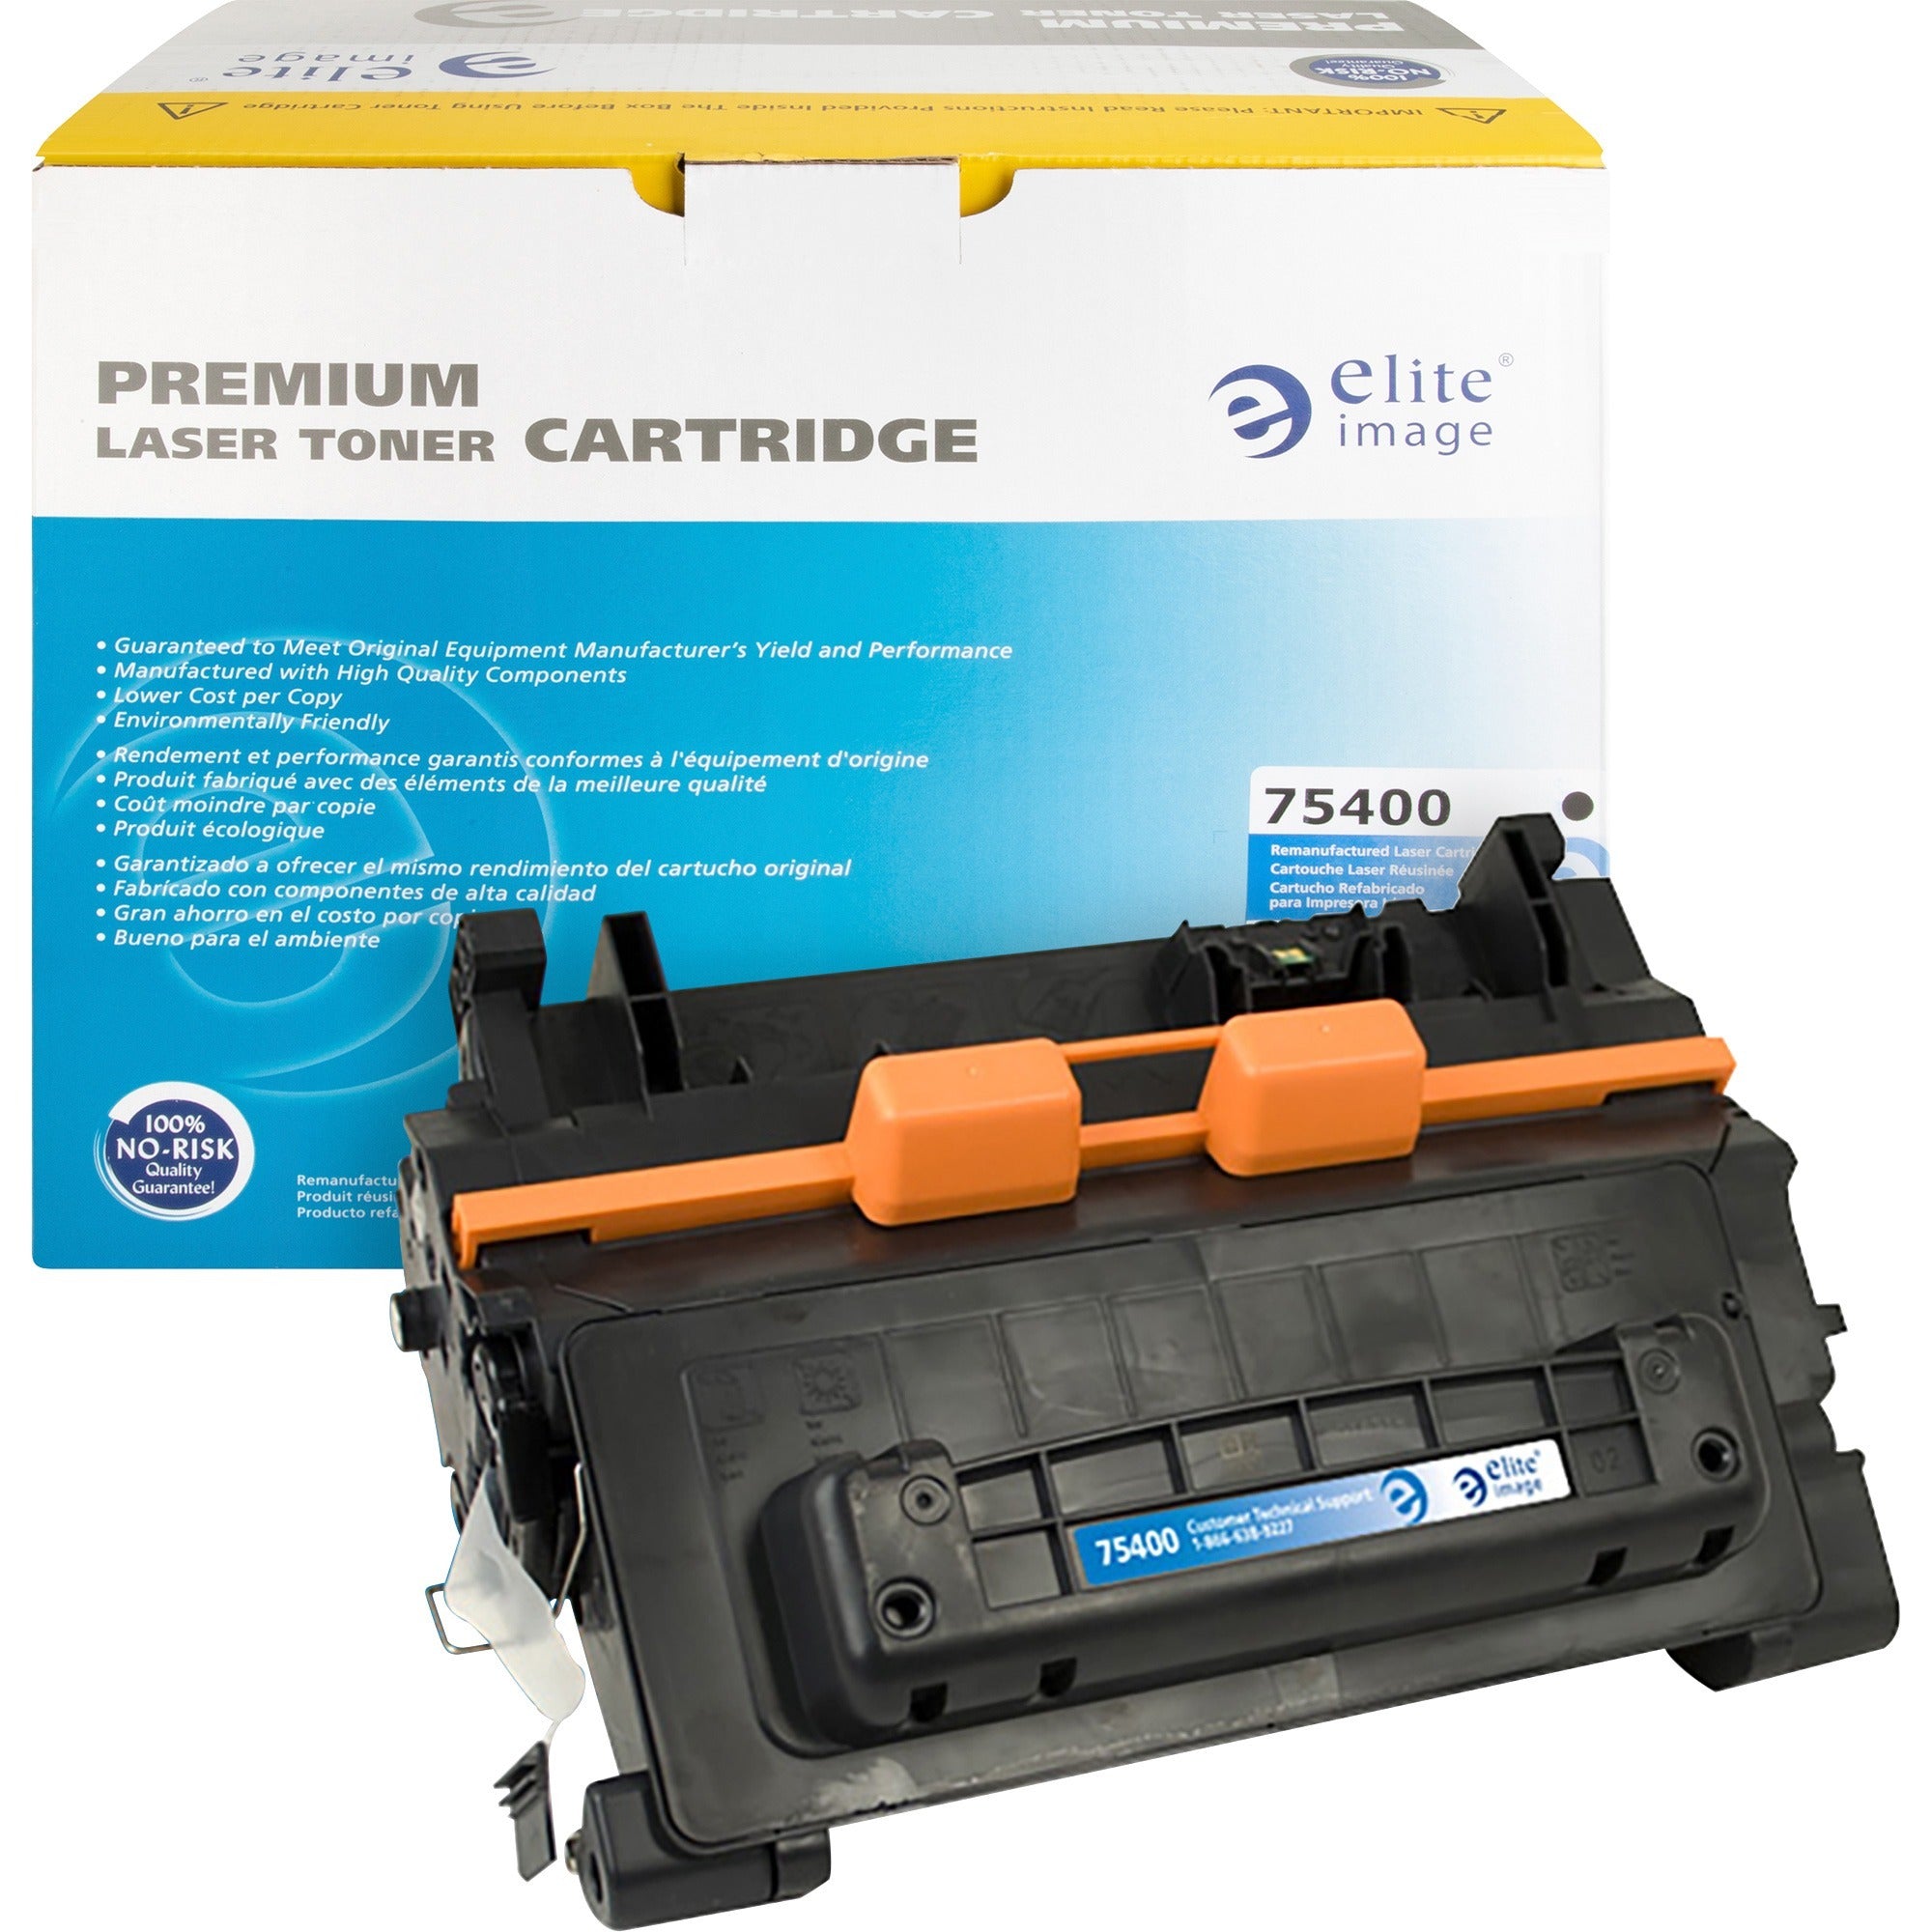 Elite Image Remanufactured Toner Cartridge - Alternative for HP 64A (CC364A) - Laser - 10000 Pages - Black - 1 Each - 